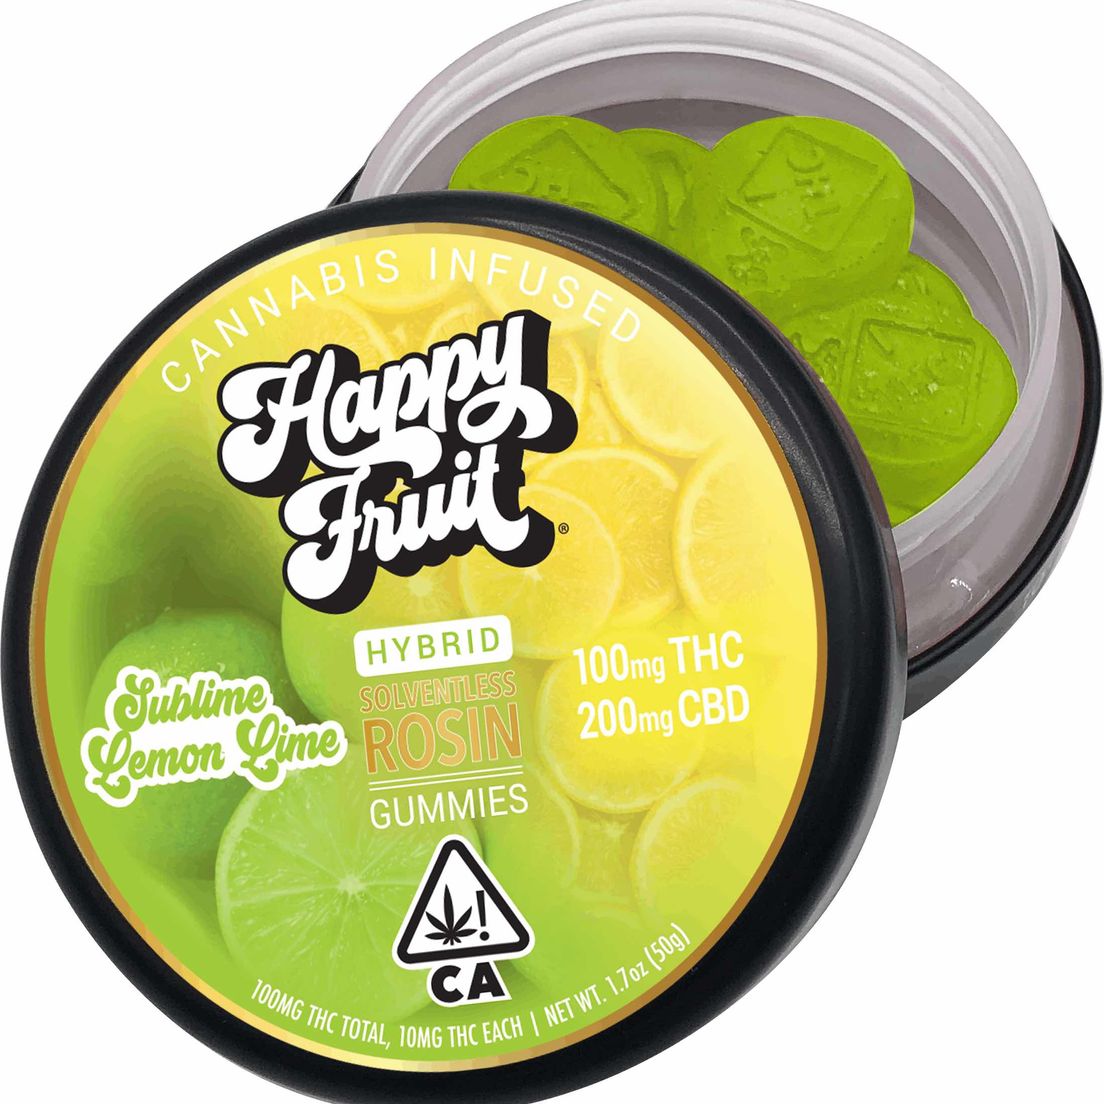 Happy Fruit - Sublime Lemon Lime Rosin Gummies - 100mg THC/200mg CBD